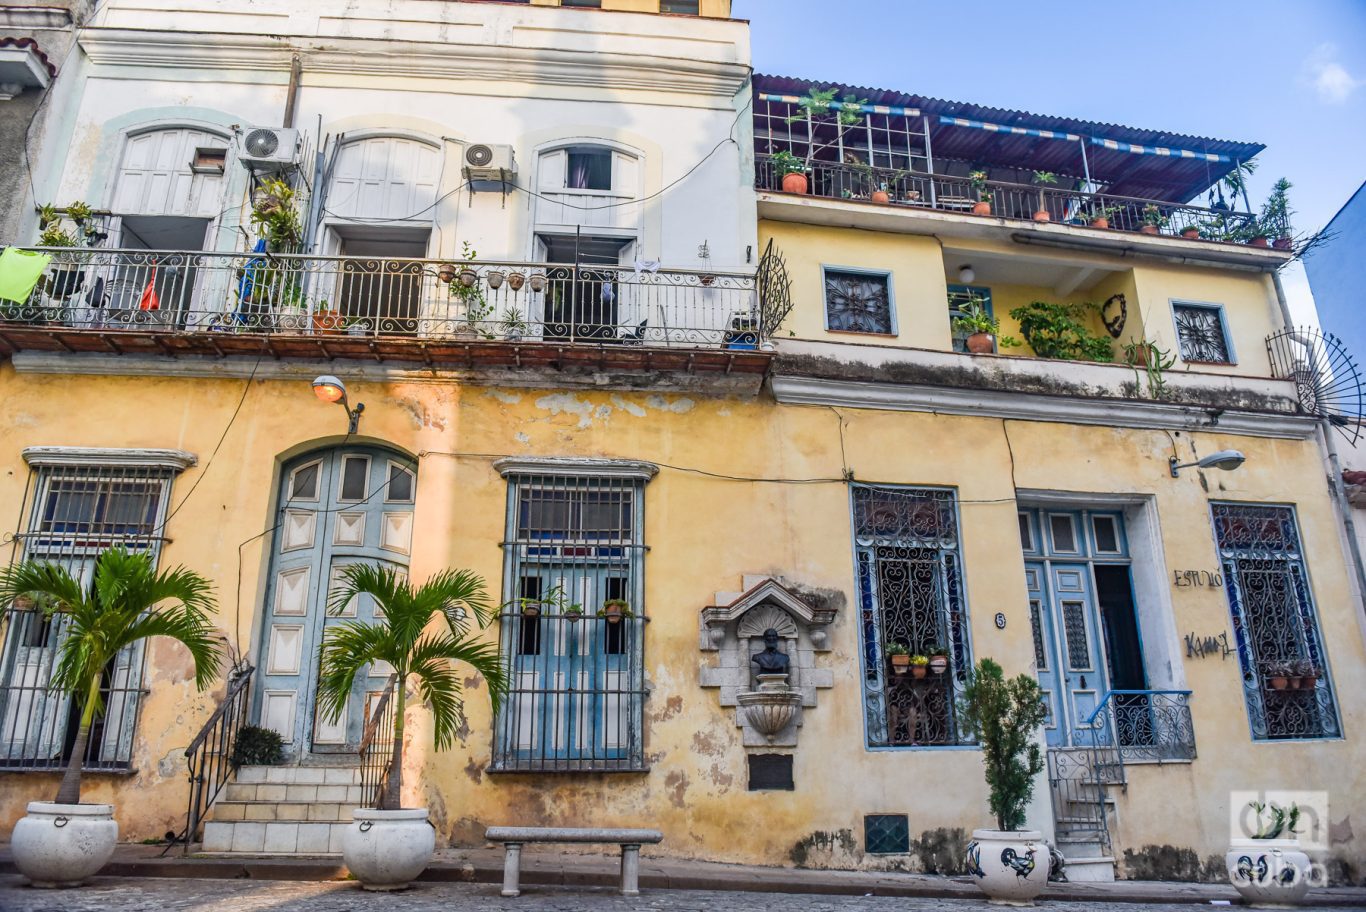 Parte de la arquitectura de La Habana colonial frente a la iglesia del Santo Ángel Custodio. Foto: Kaloian.